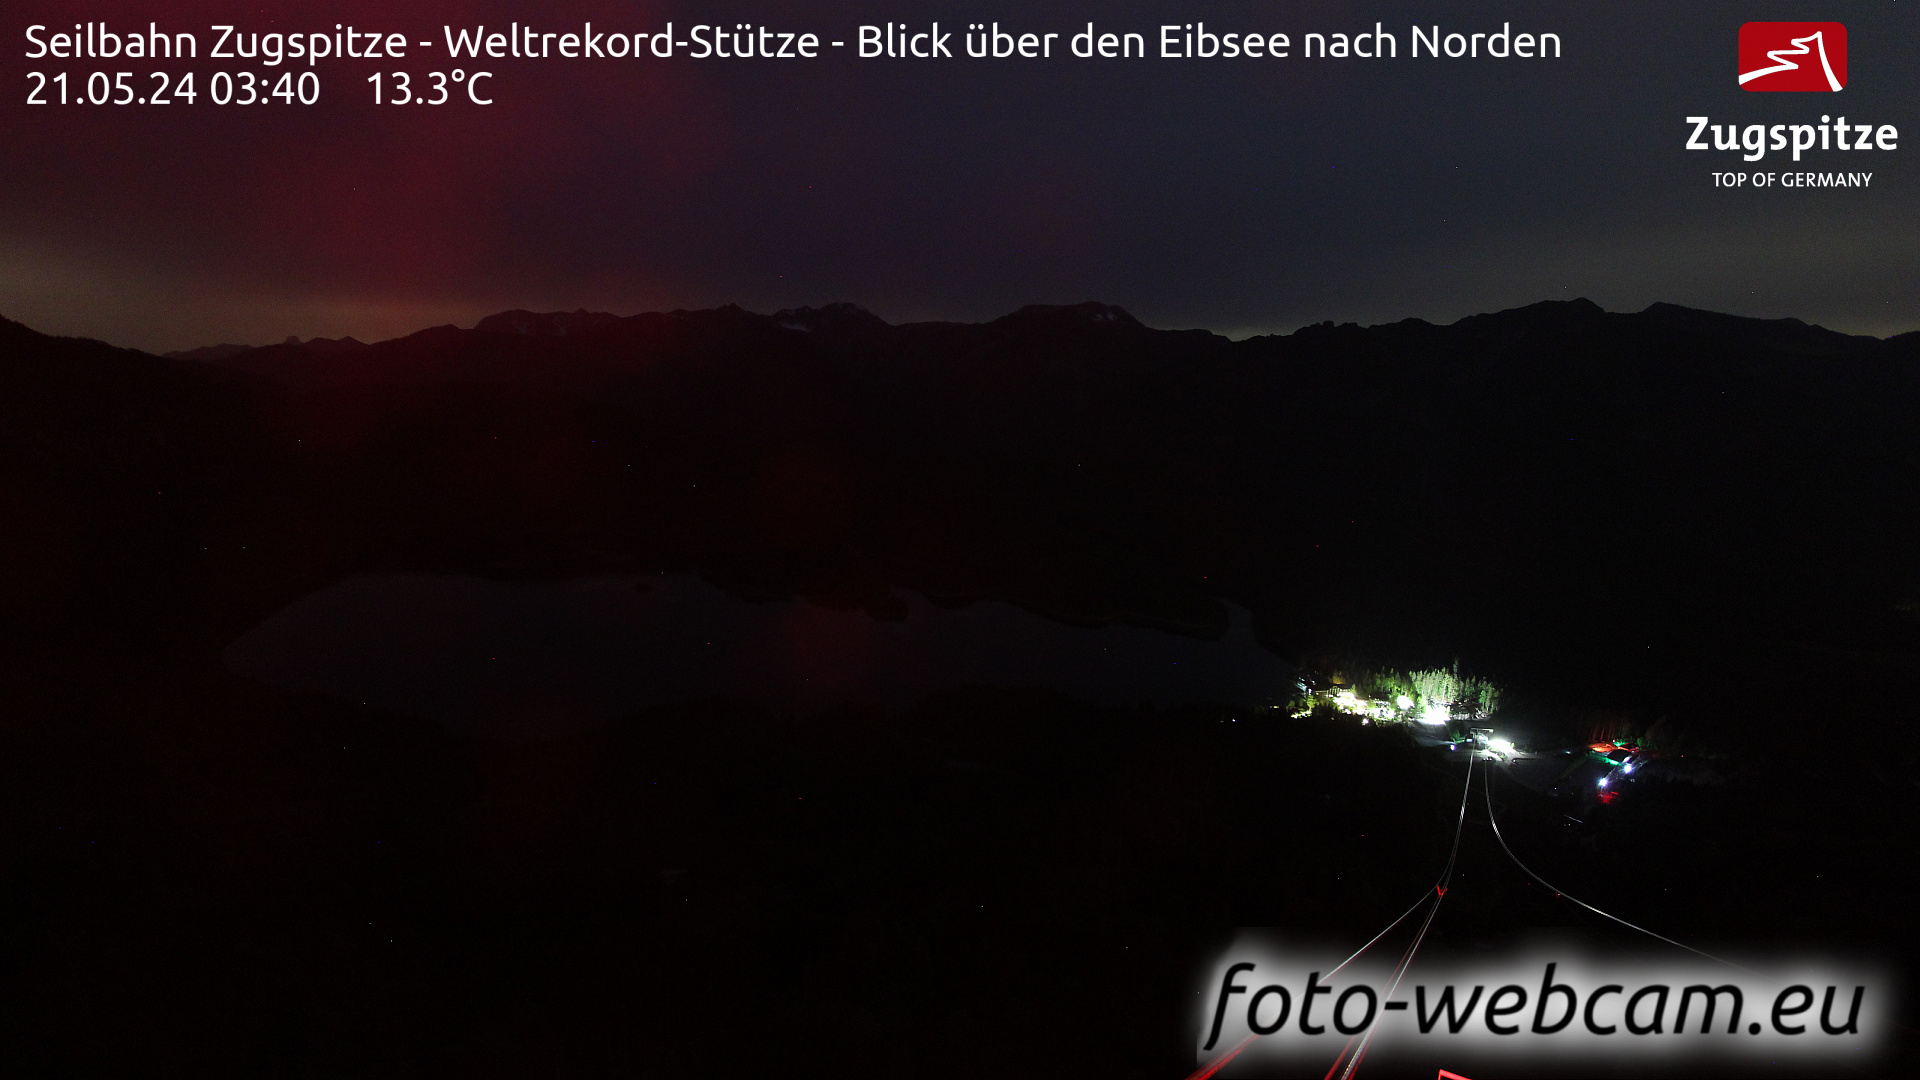 Zugspitze Ons. 03:49